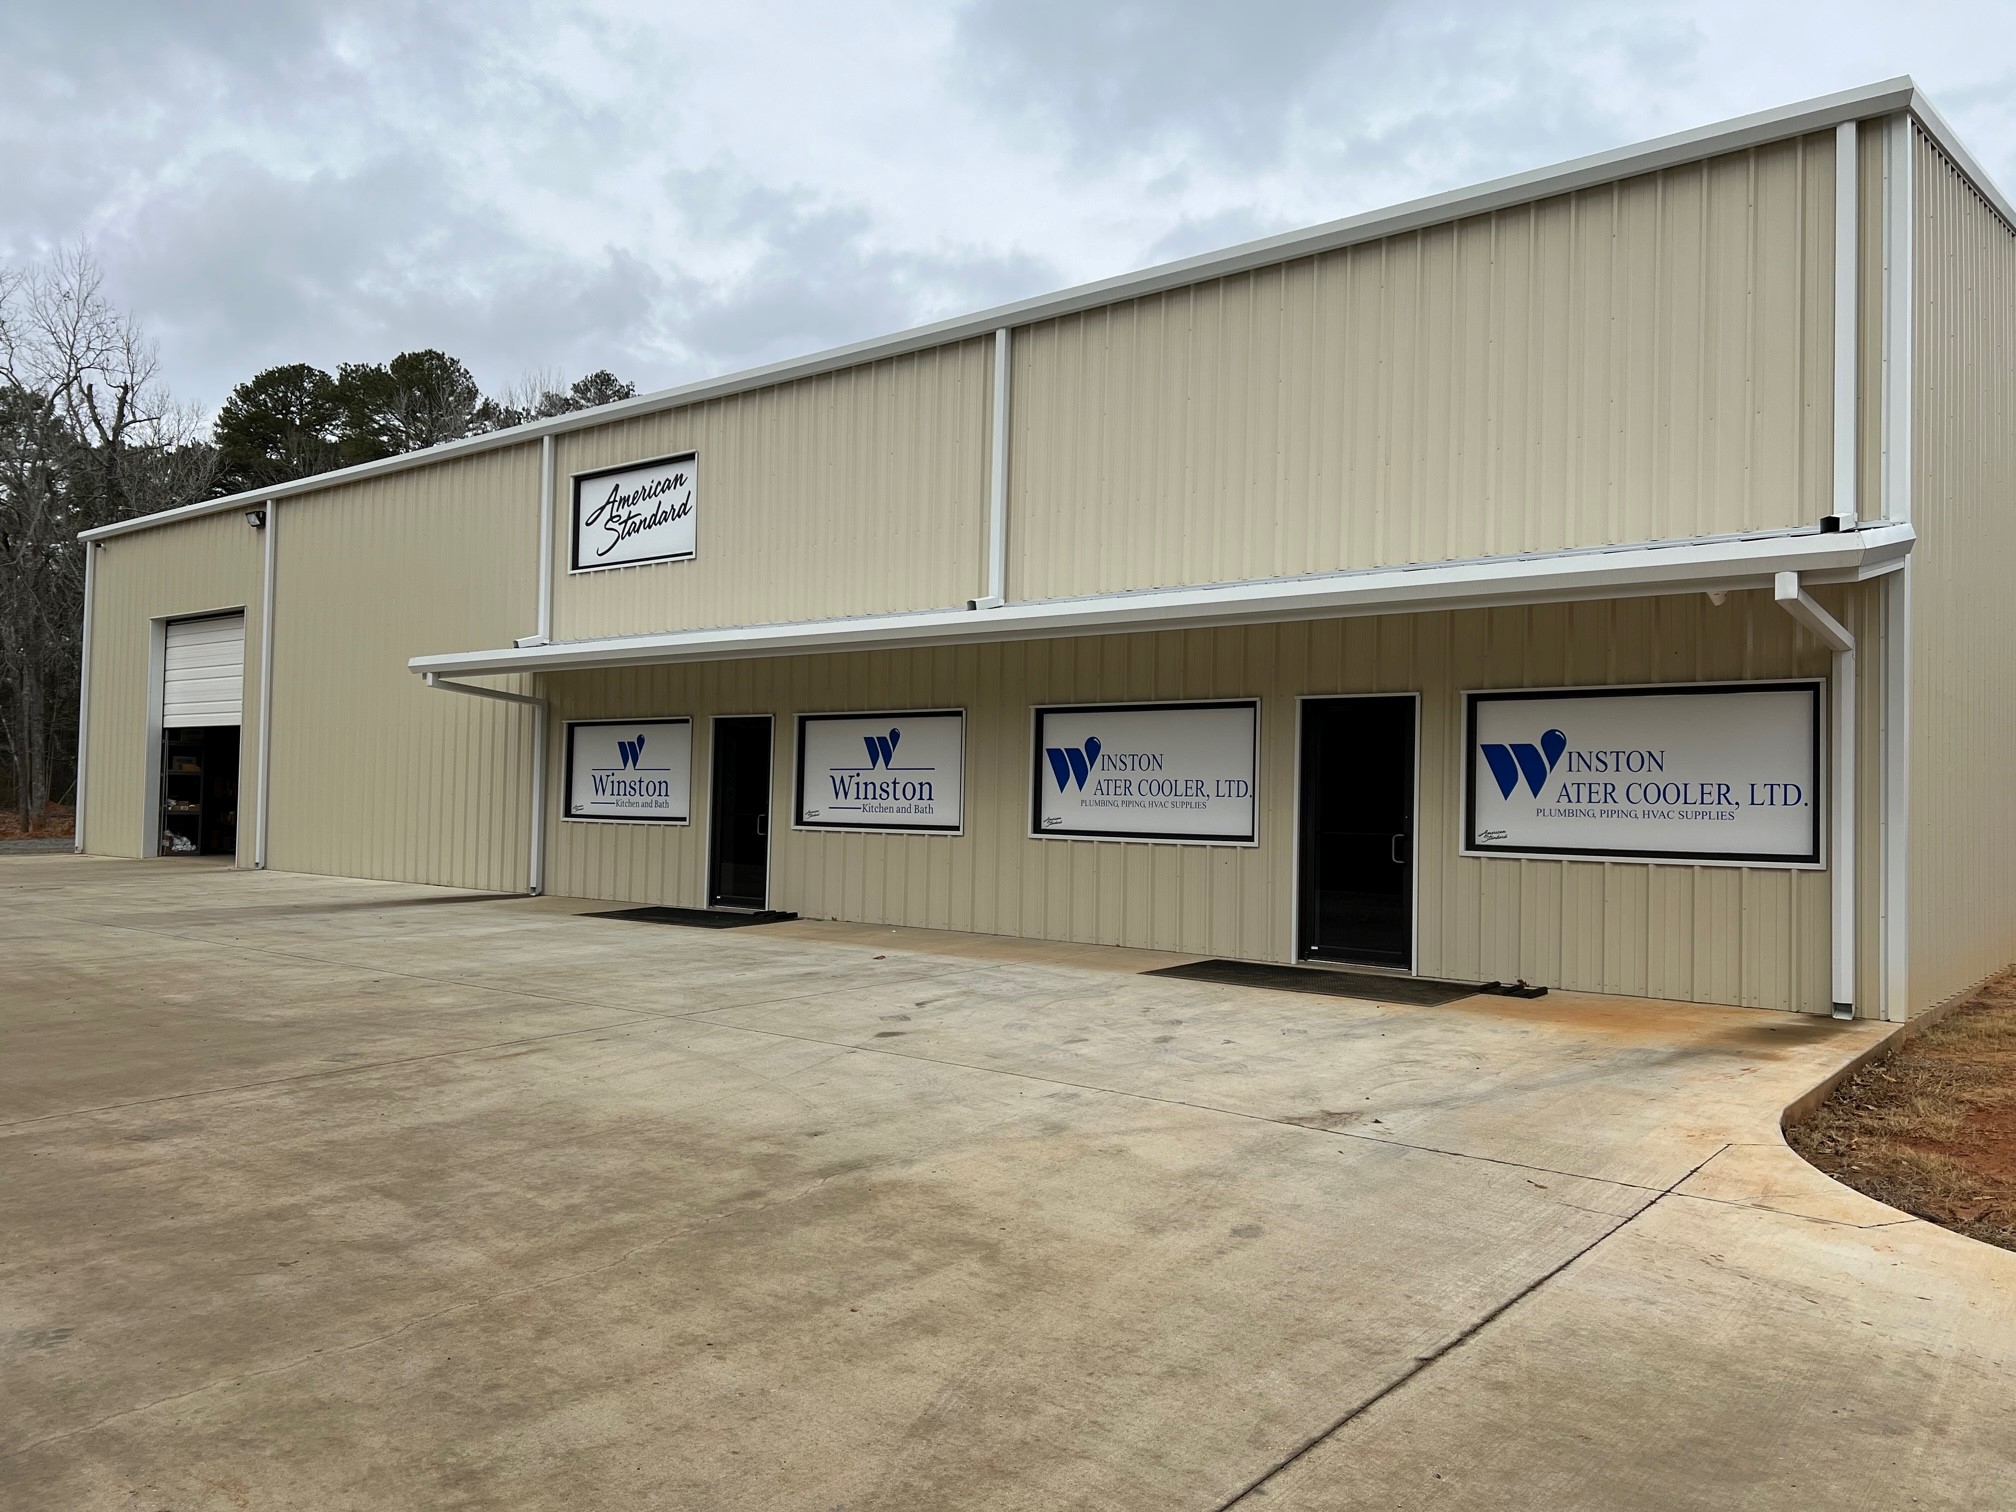 Winston Water Cooler Wholesale plumbing supply store in San Antonio